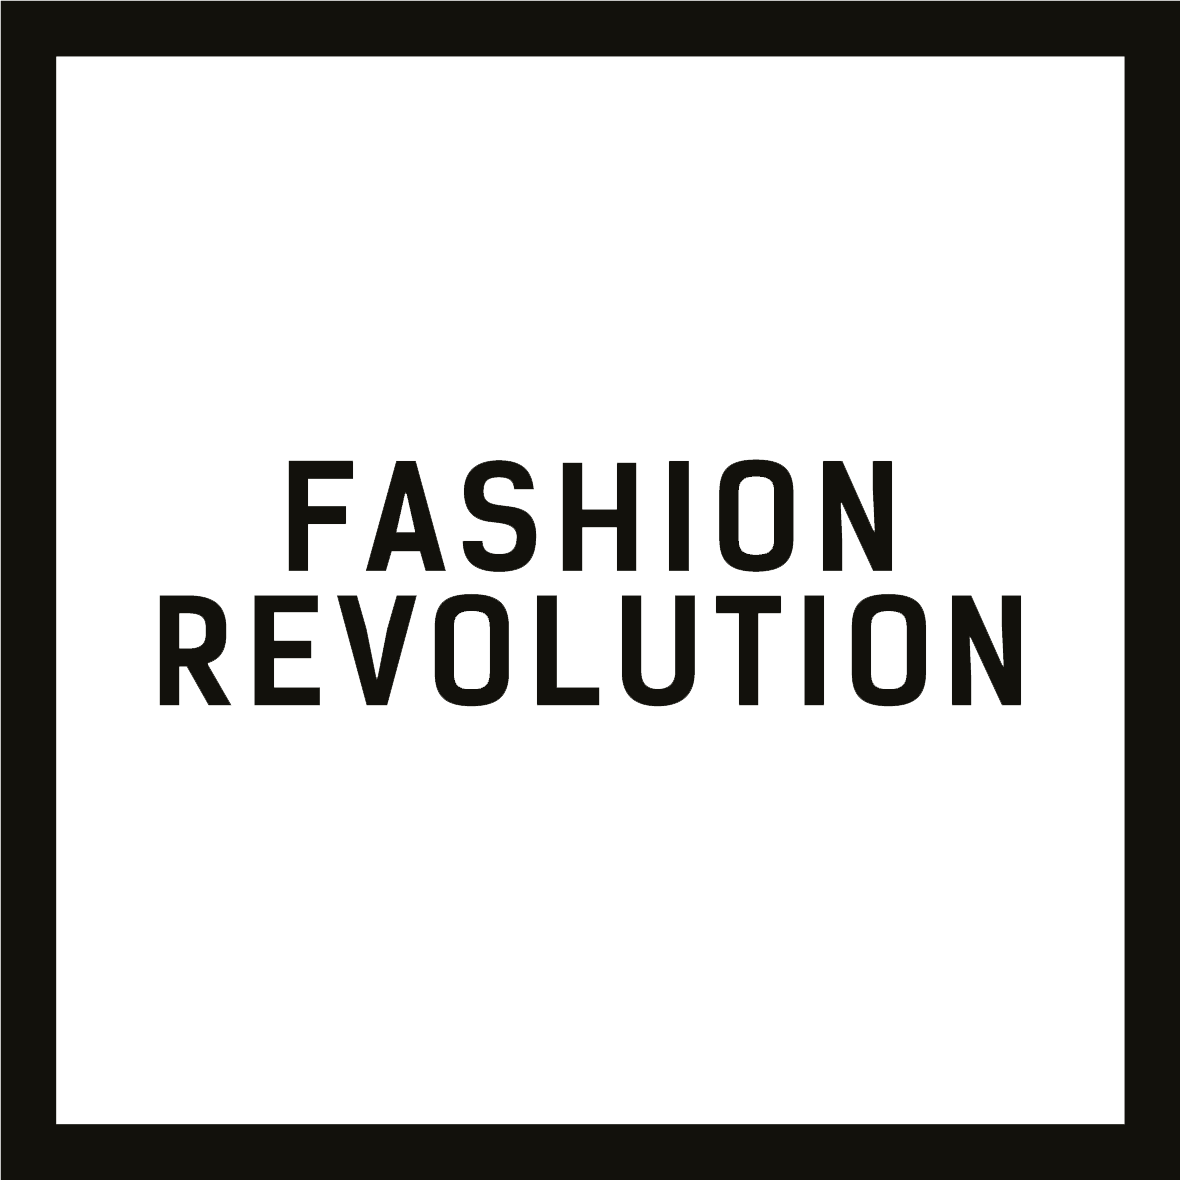 Fashion Revolution BW